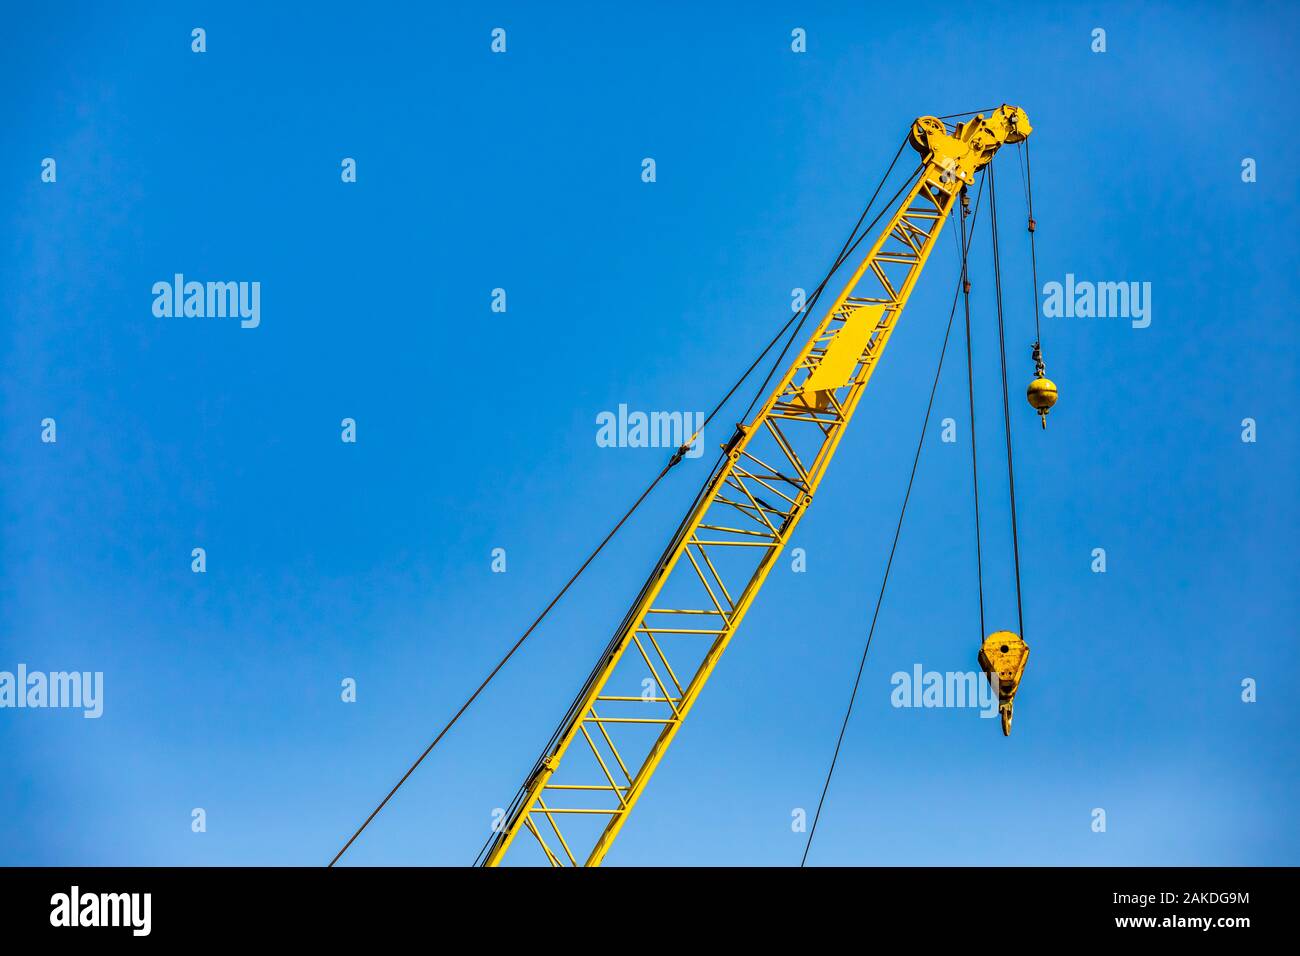 Tower Crane Jib Stock Photos & Tower Crane Jib Stock Images - Alamy